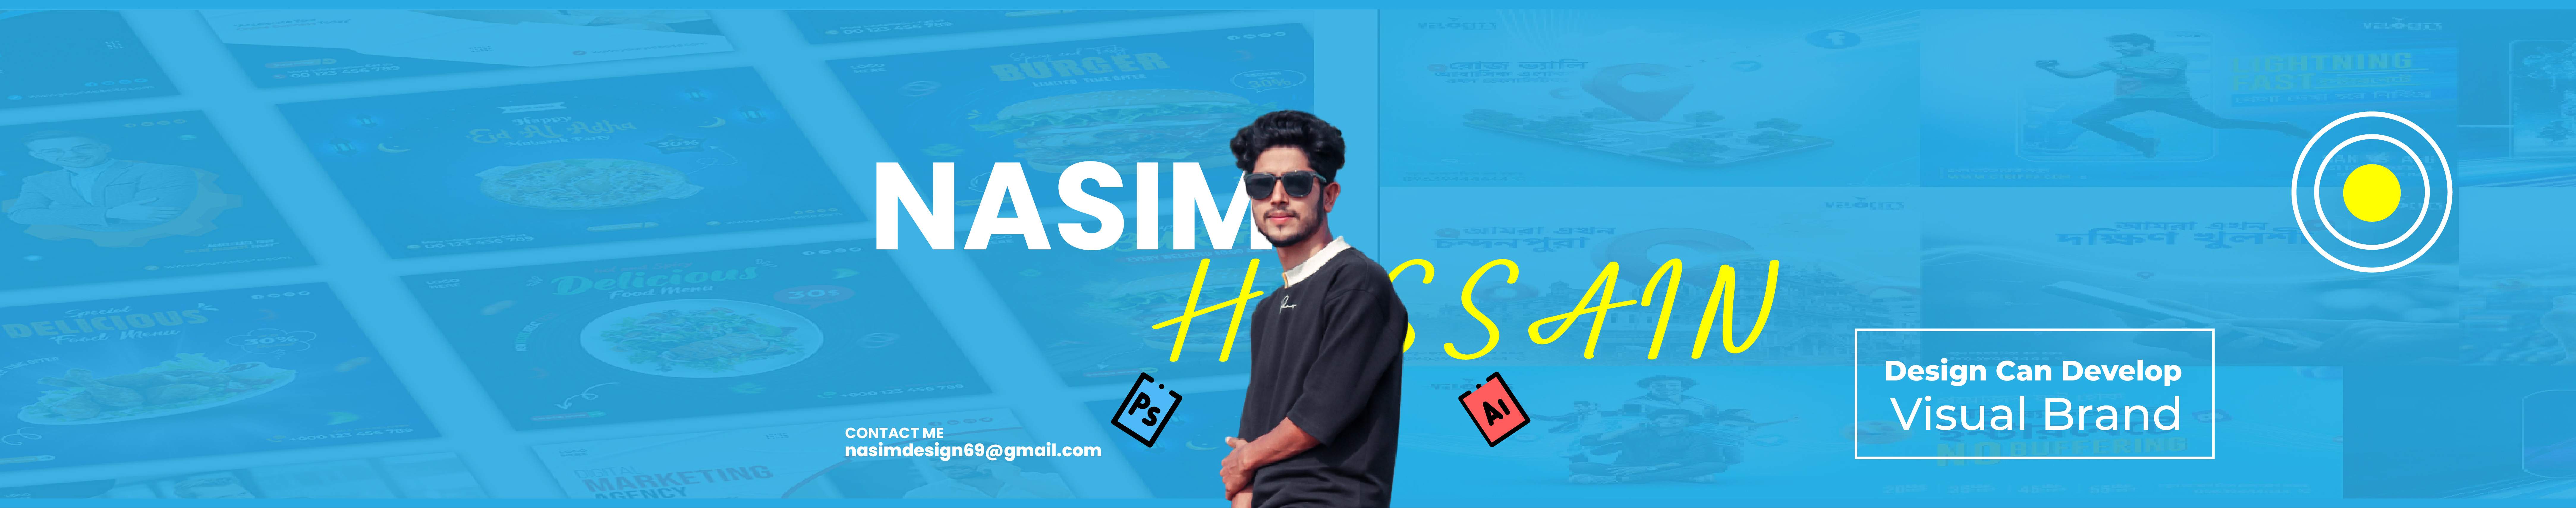 Nasim Hossain's profile banner